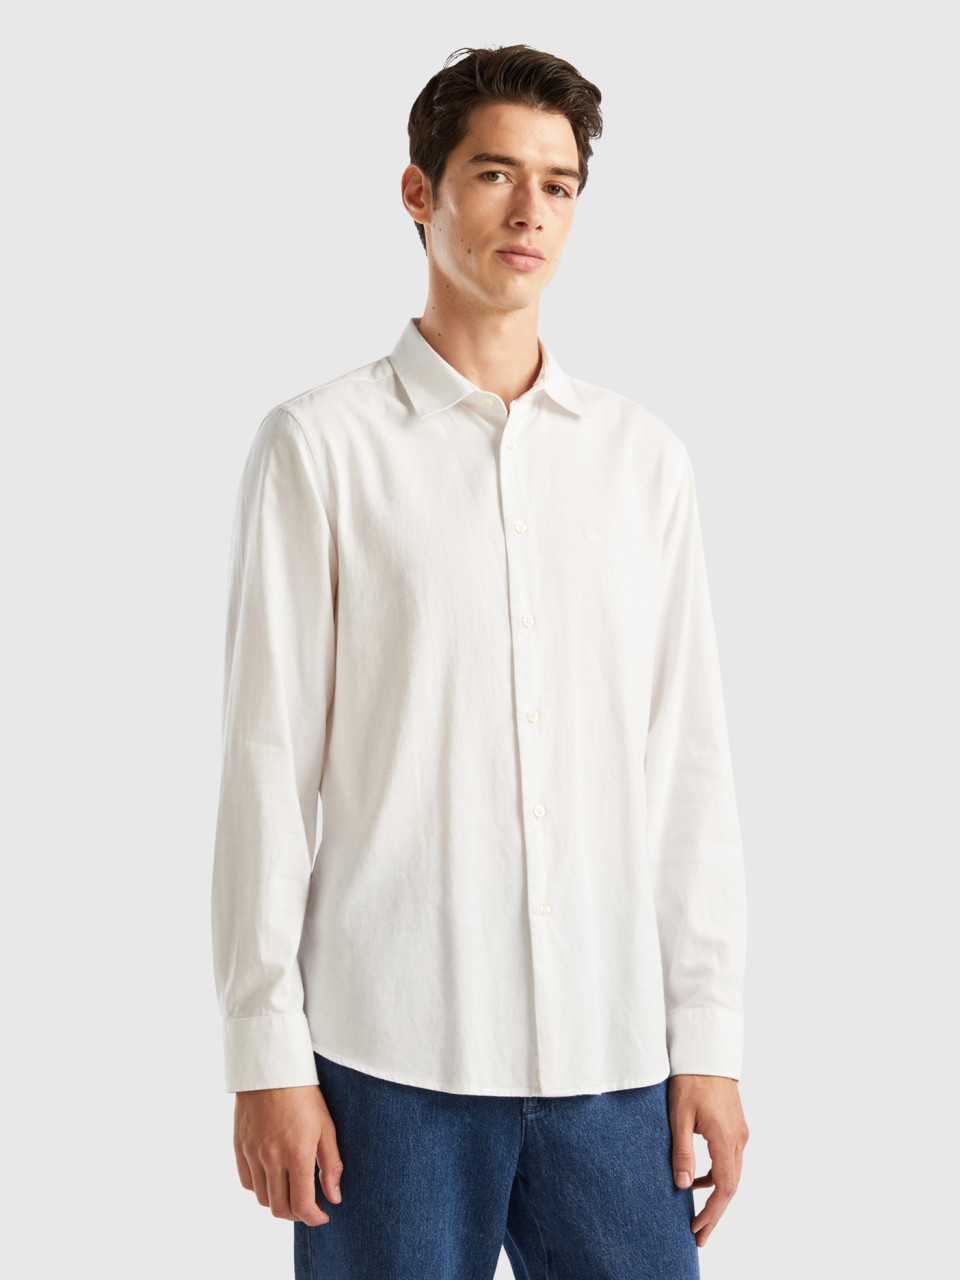 Benetton, Slim Fit Flannel Shirt, White, Men